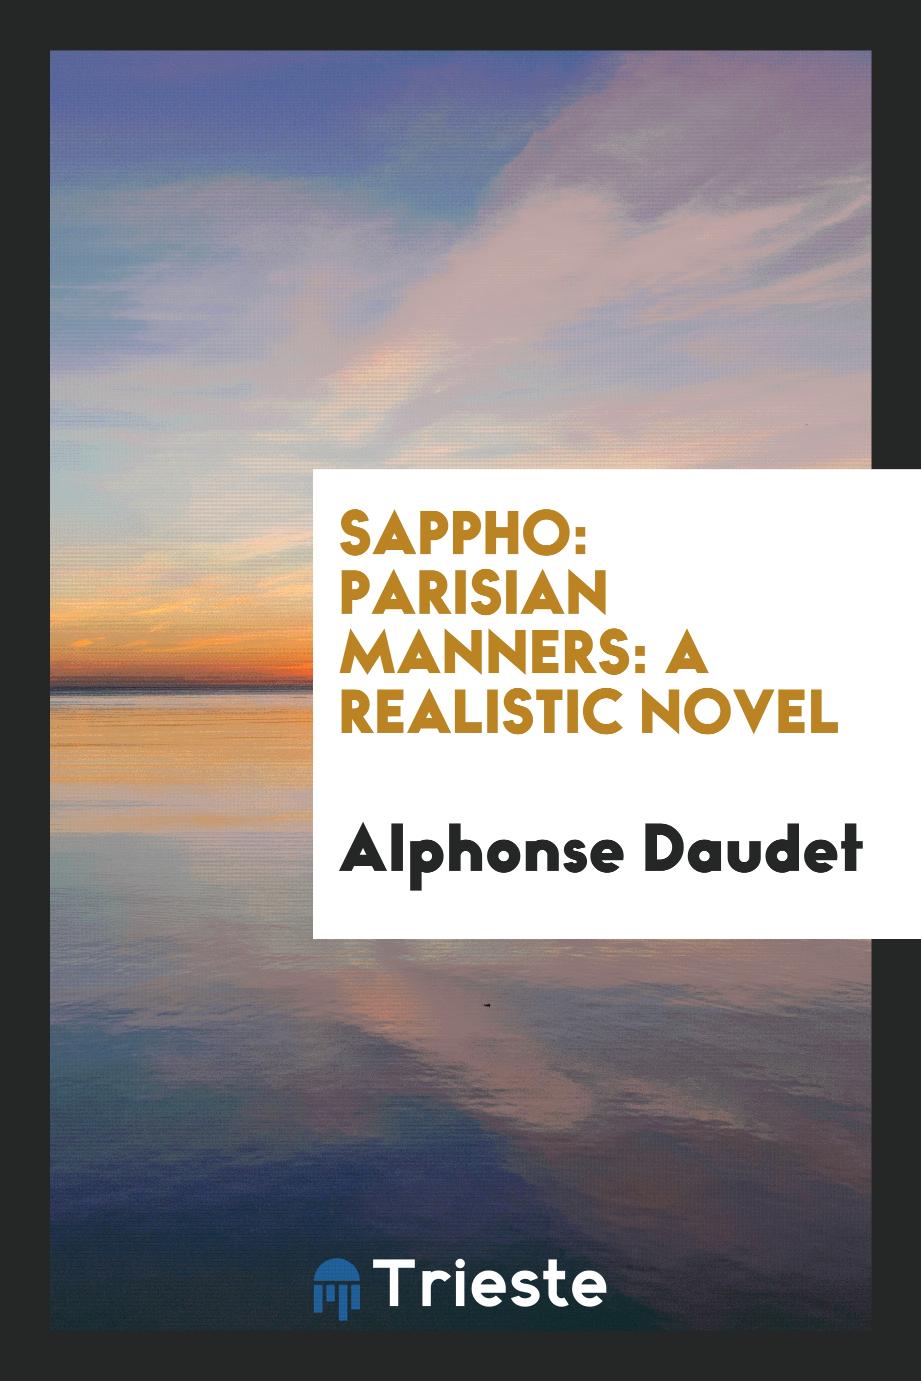 Sappho: Parisian Manners: A Realistic Novel